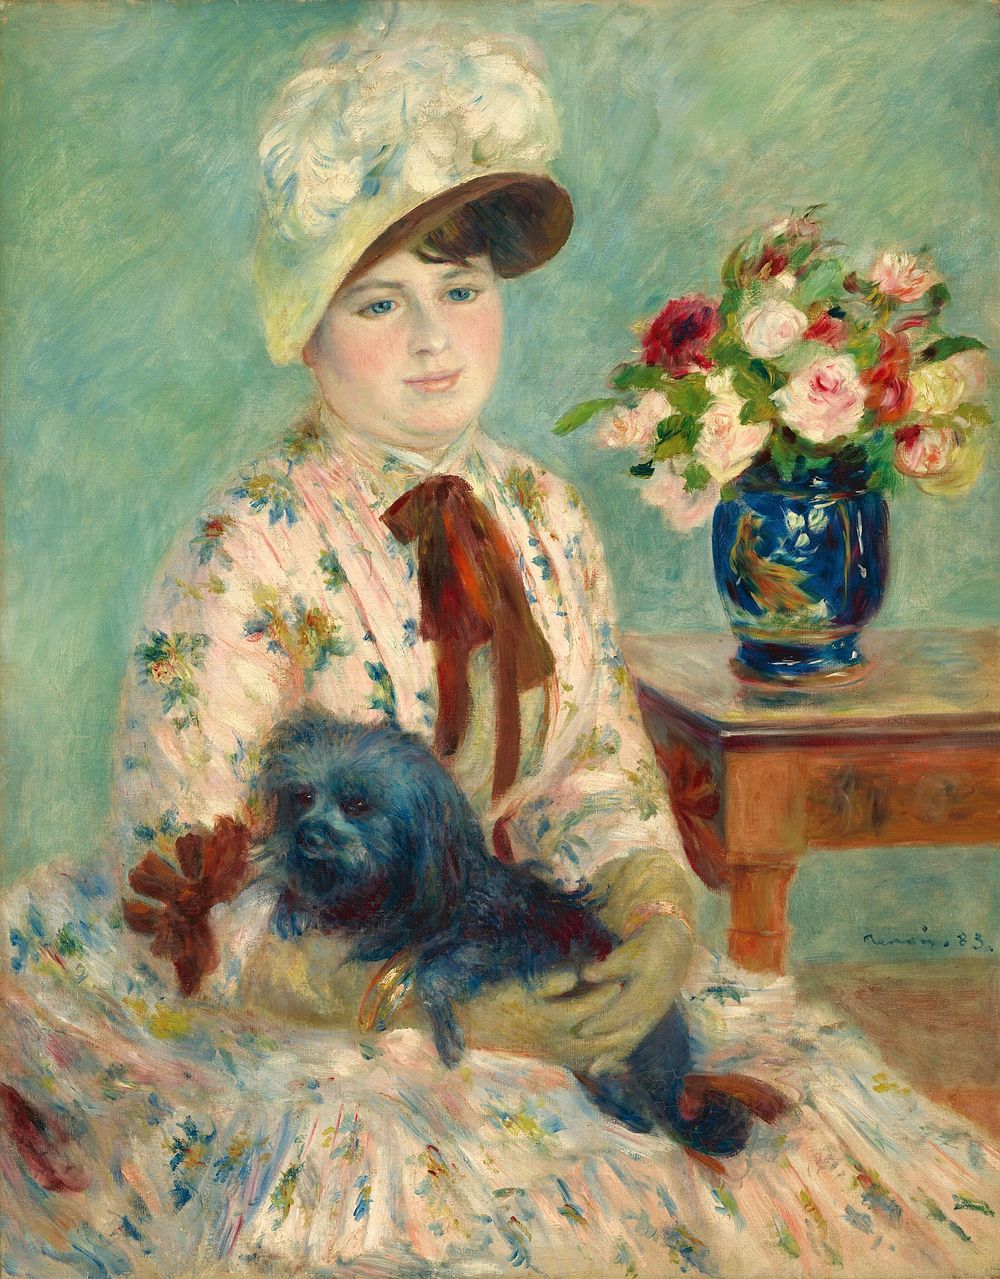 Pierre-Auguste Renoir's Mlle Charlotte Berthier (1883) painting in high resolution 